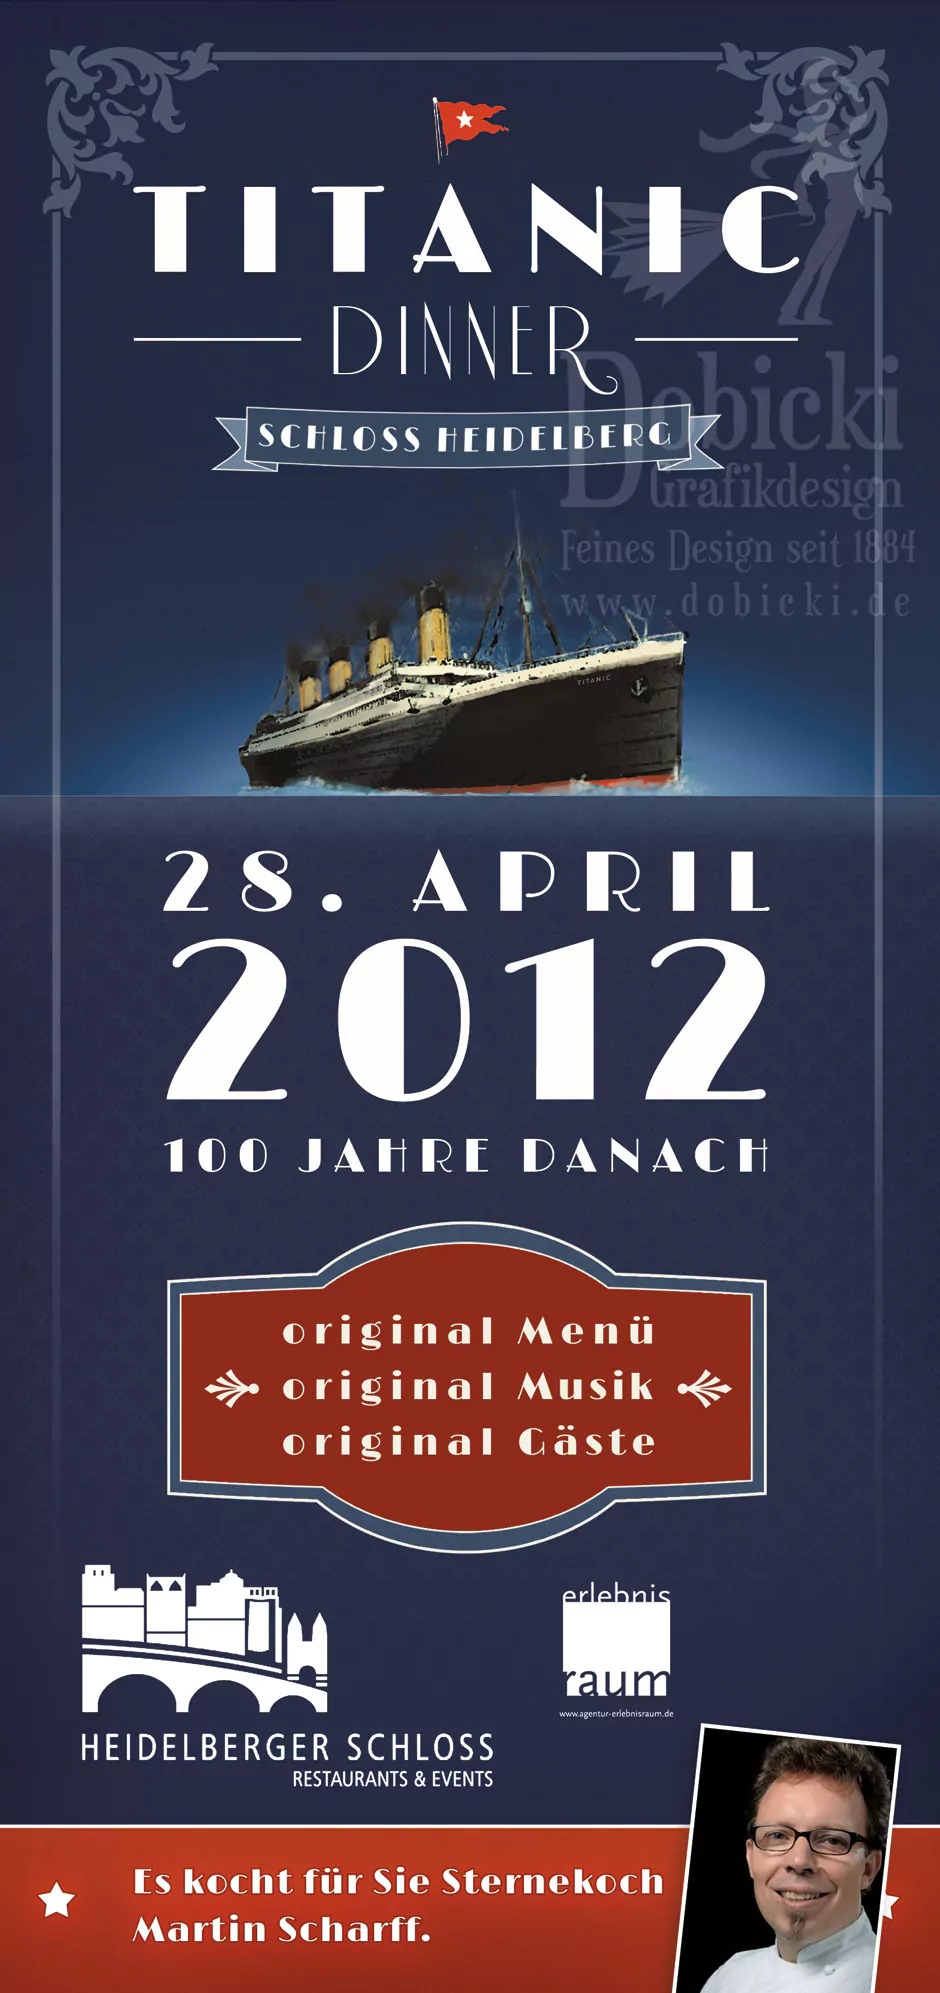 Titanic Flyer 2 Seiten Din Lang HEIDELBERG2 front druckfinal